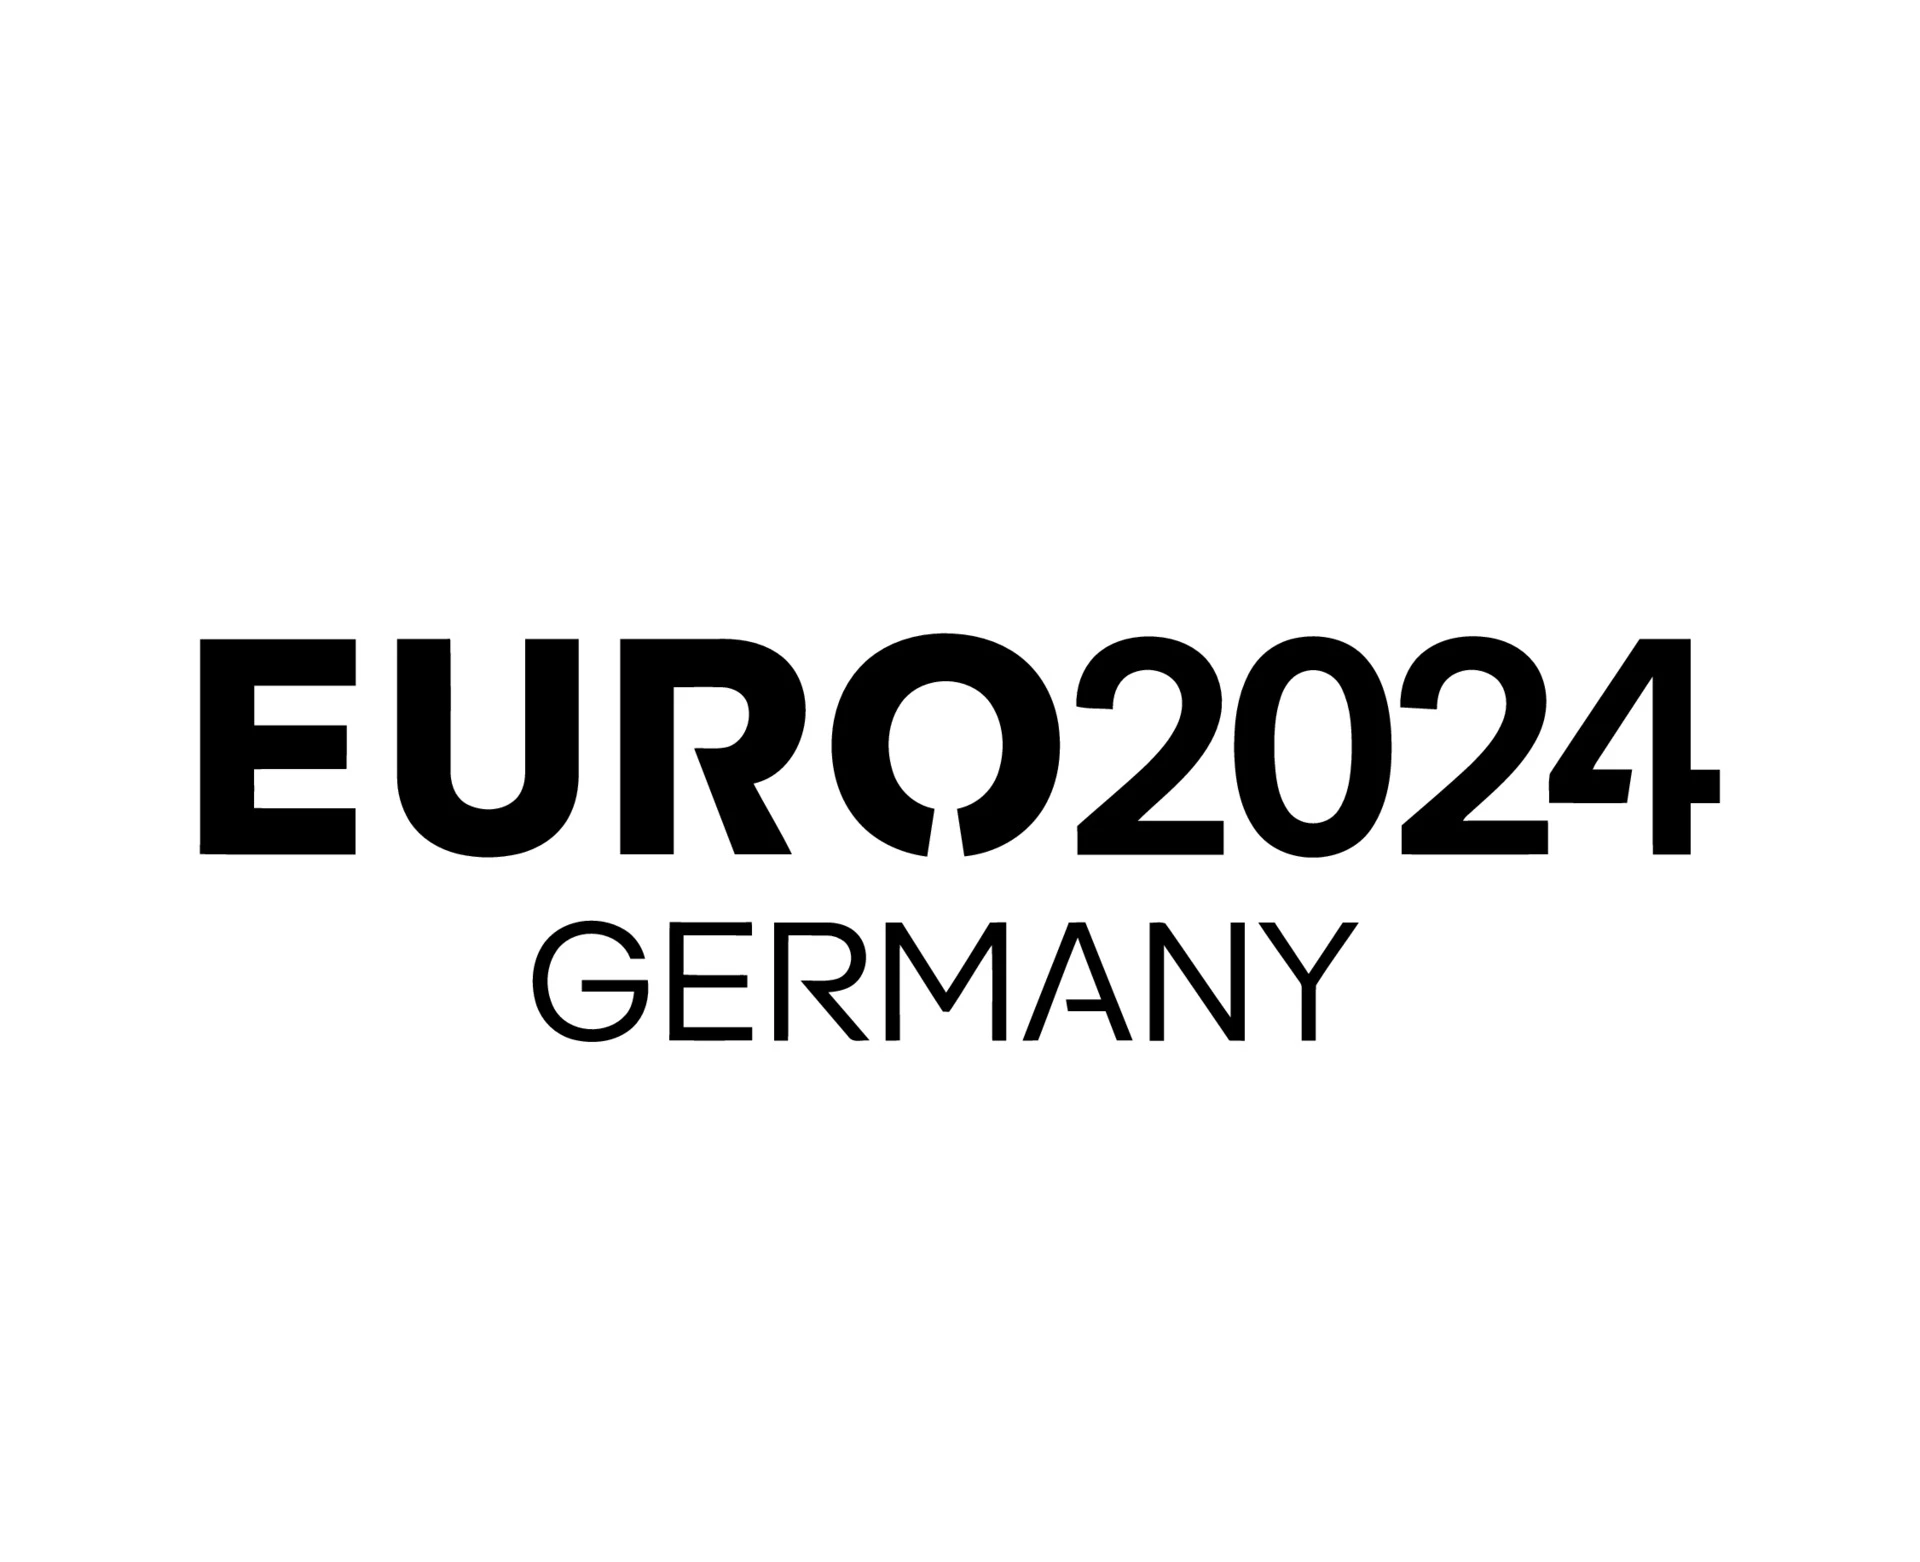 vecteezy euro 2024 germany logo official name black symbol european 22700807